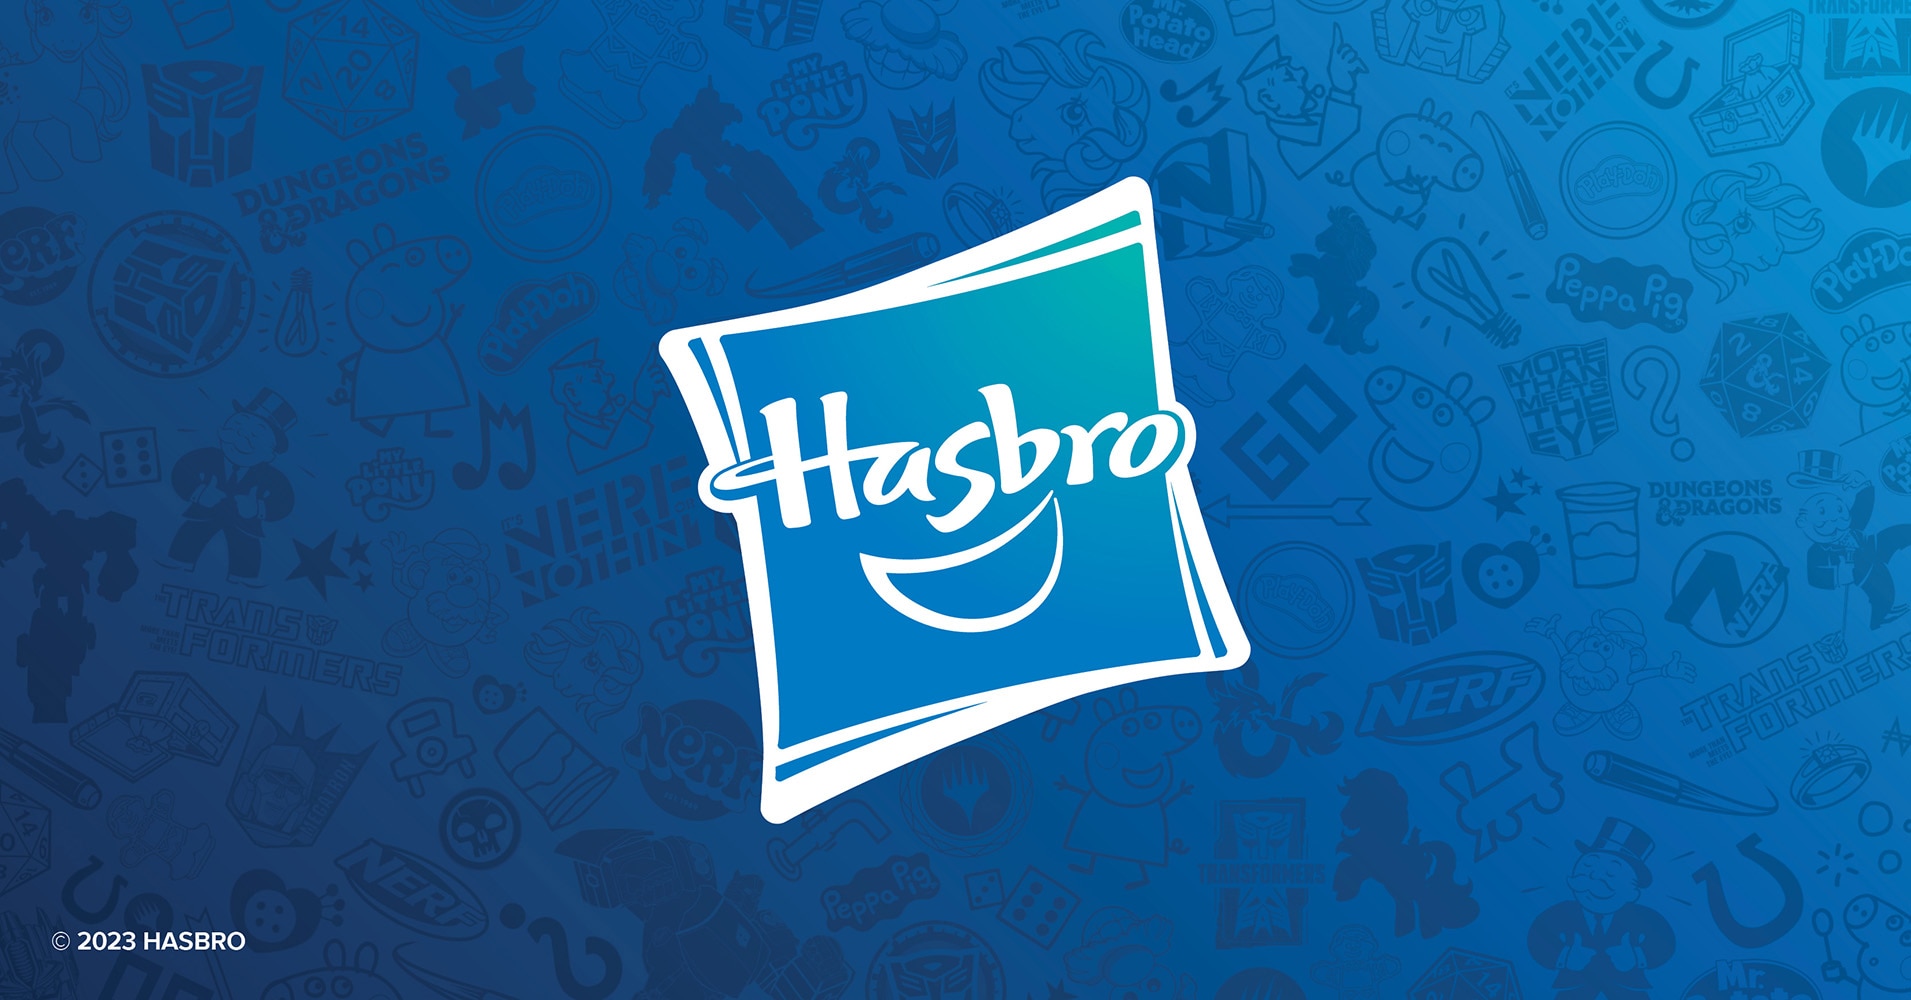 Jobs and Internship Opportunities - Hasbro